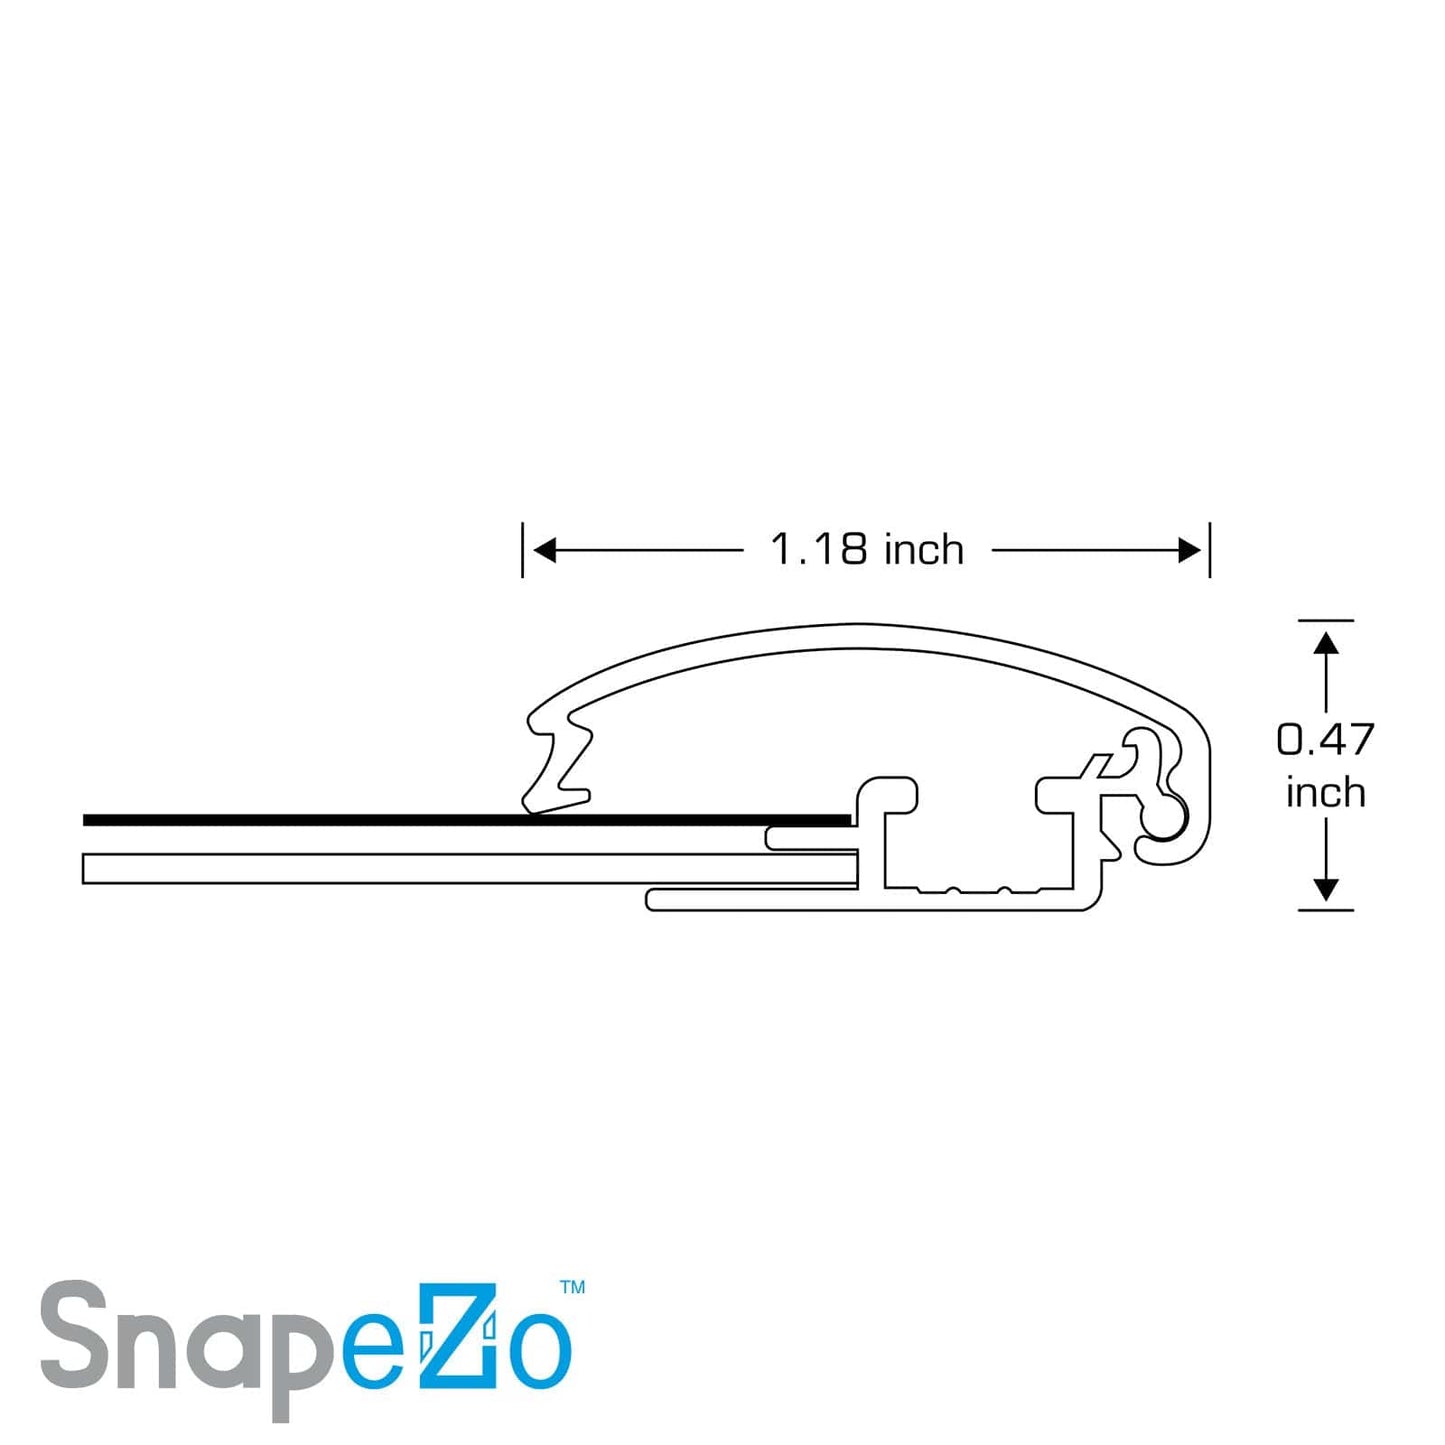 21x27 Silver SnapeZo® Snap Frame - 1.2" Profile - Snap Frames Direct